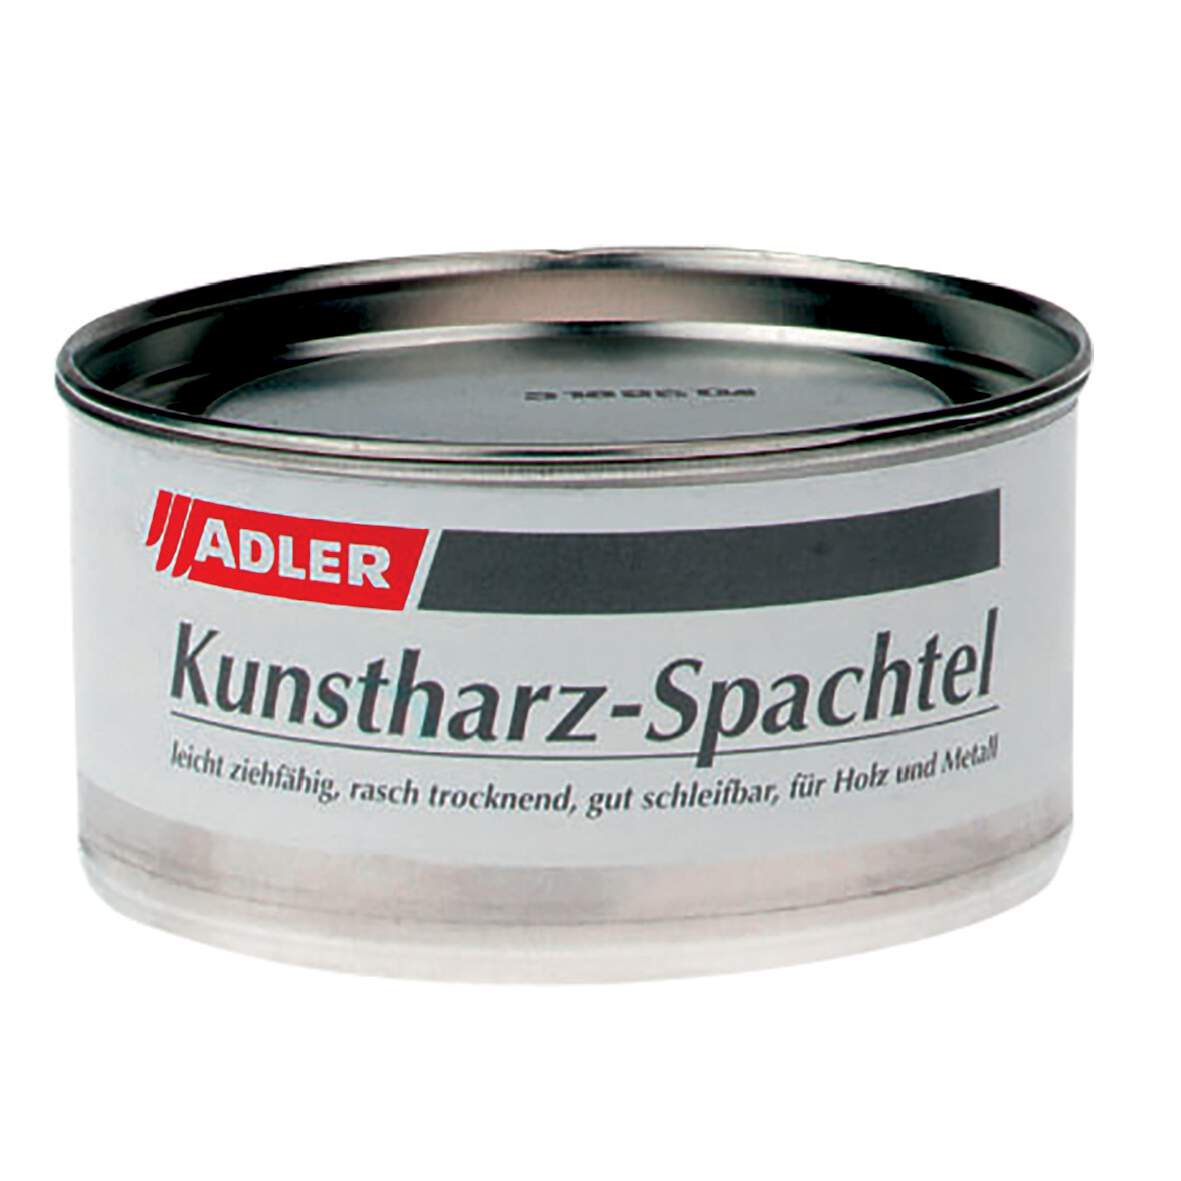 1094621 - Kunstharz-Spachtel